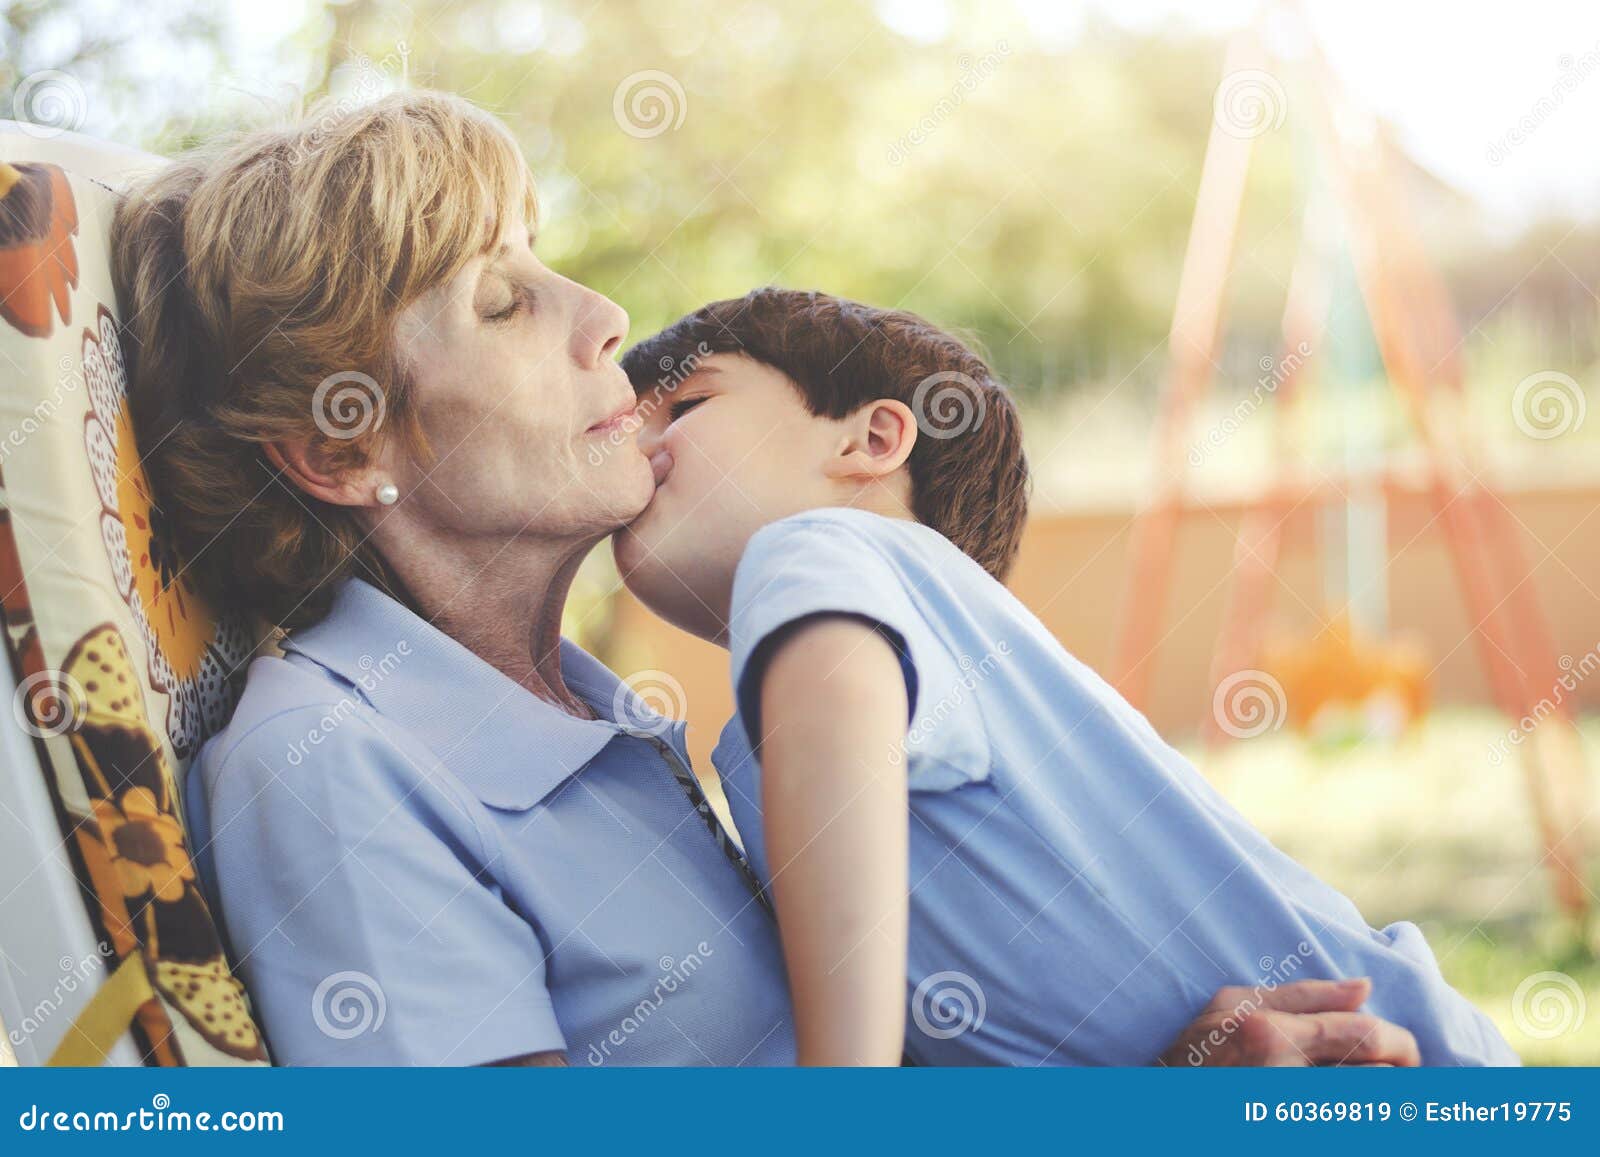 Девушка лижет бабушкам. Бабушка поцелуй. Бабушка целует внука. Поцелуй для внука.